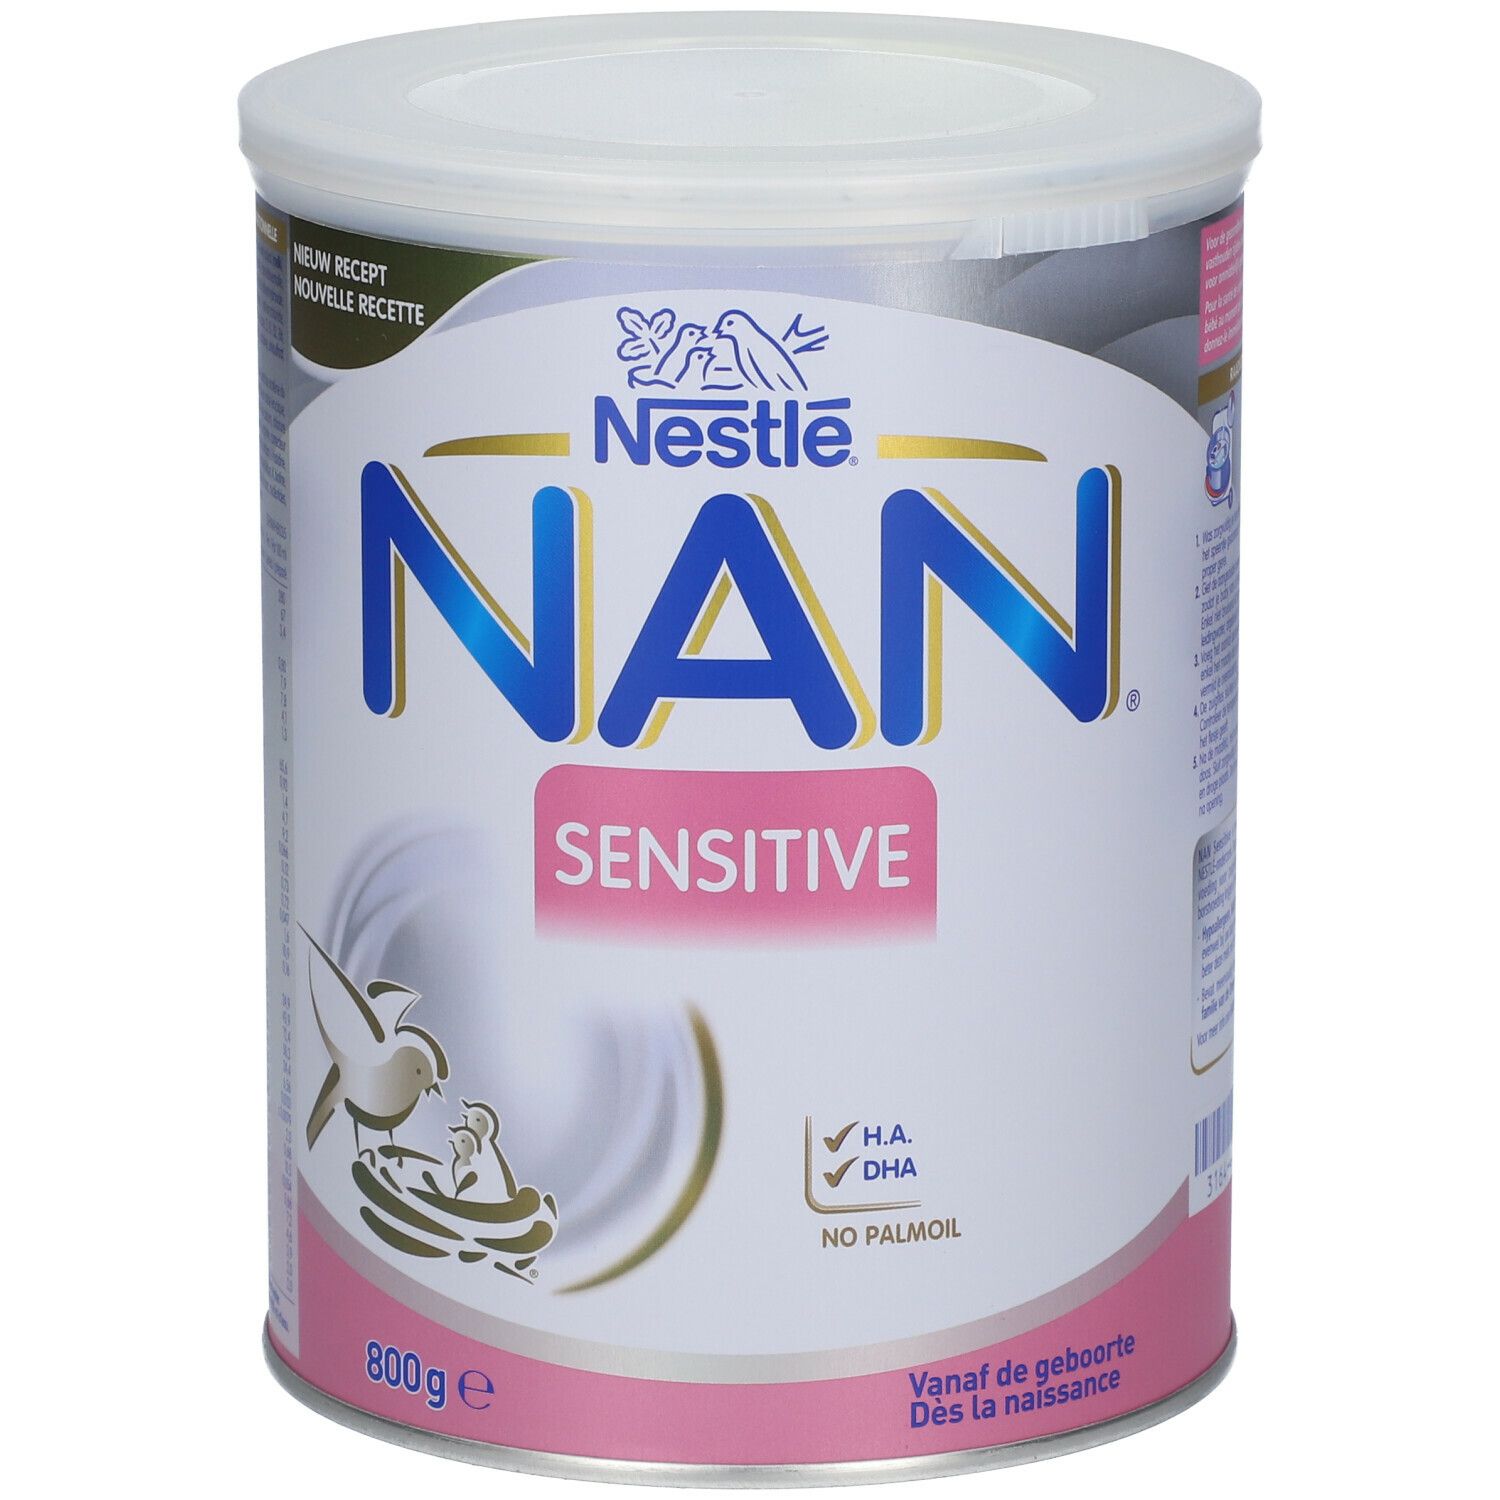 Nestlé NAN Sensitive